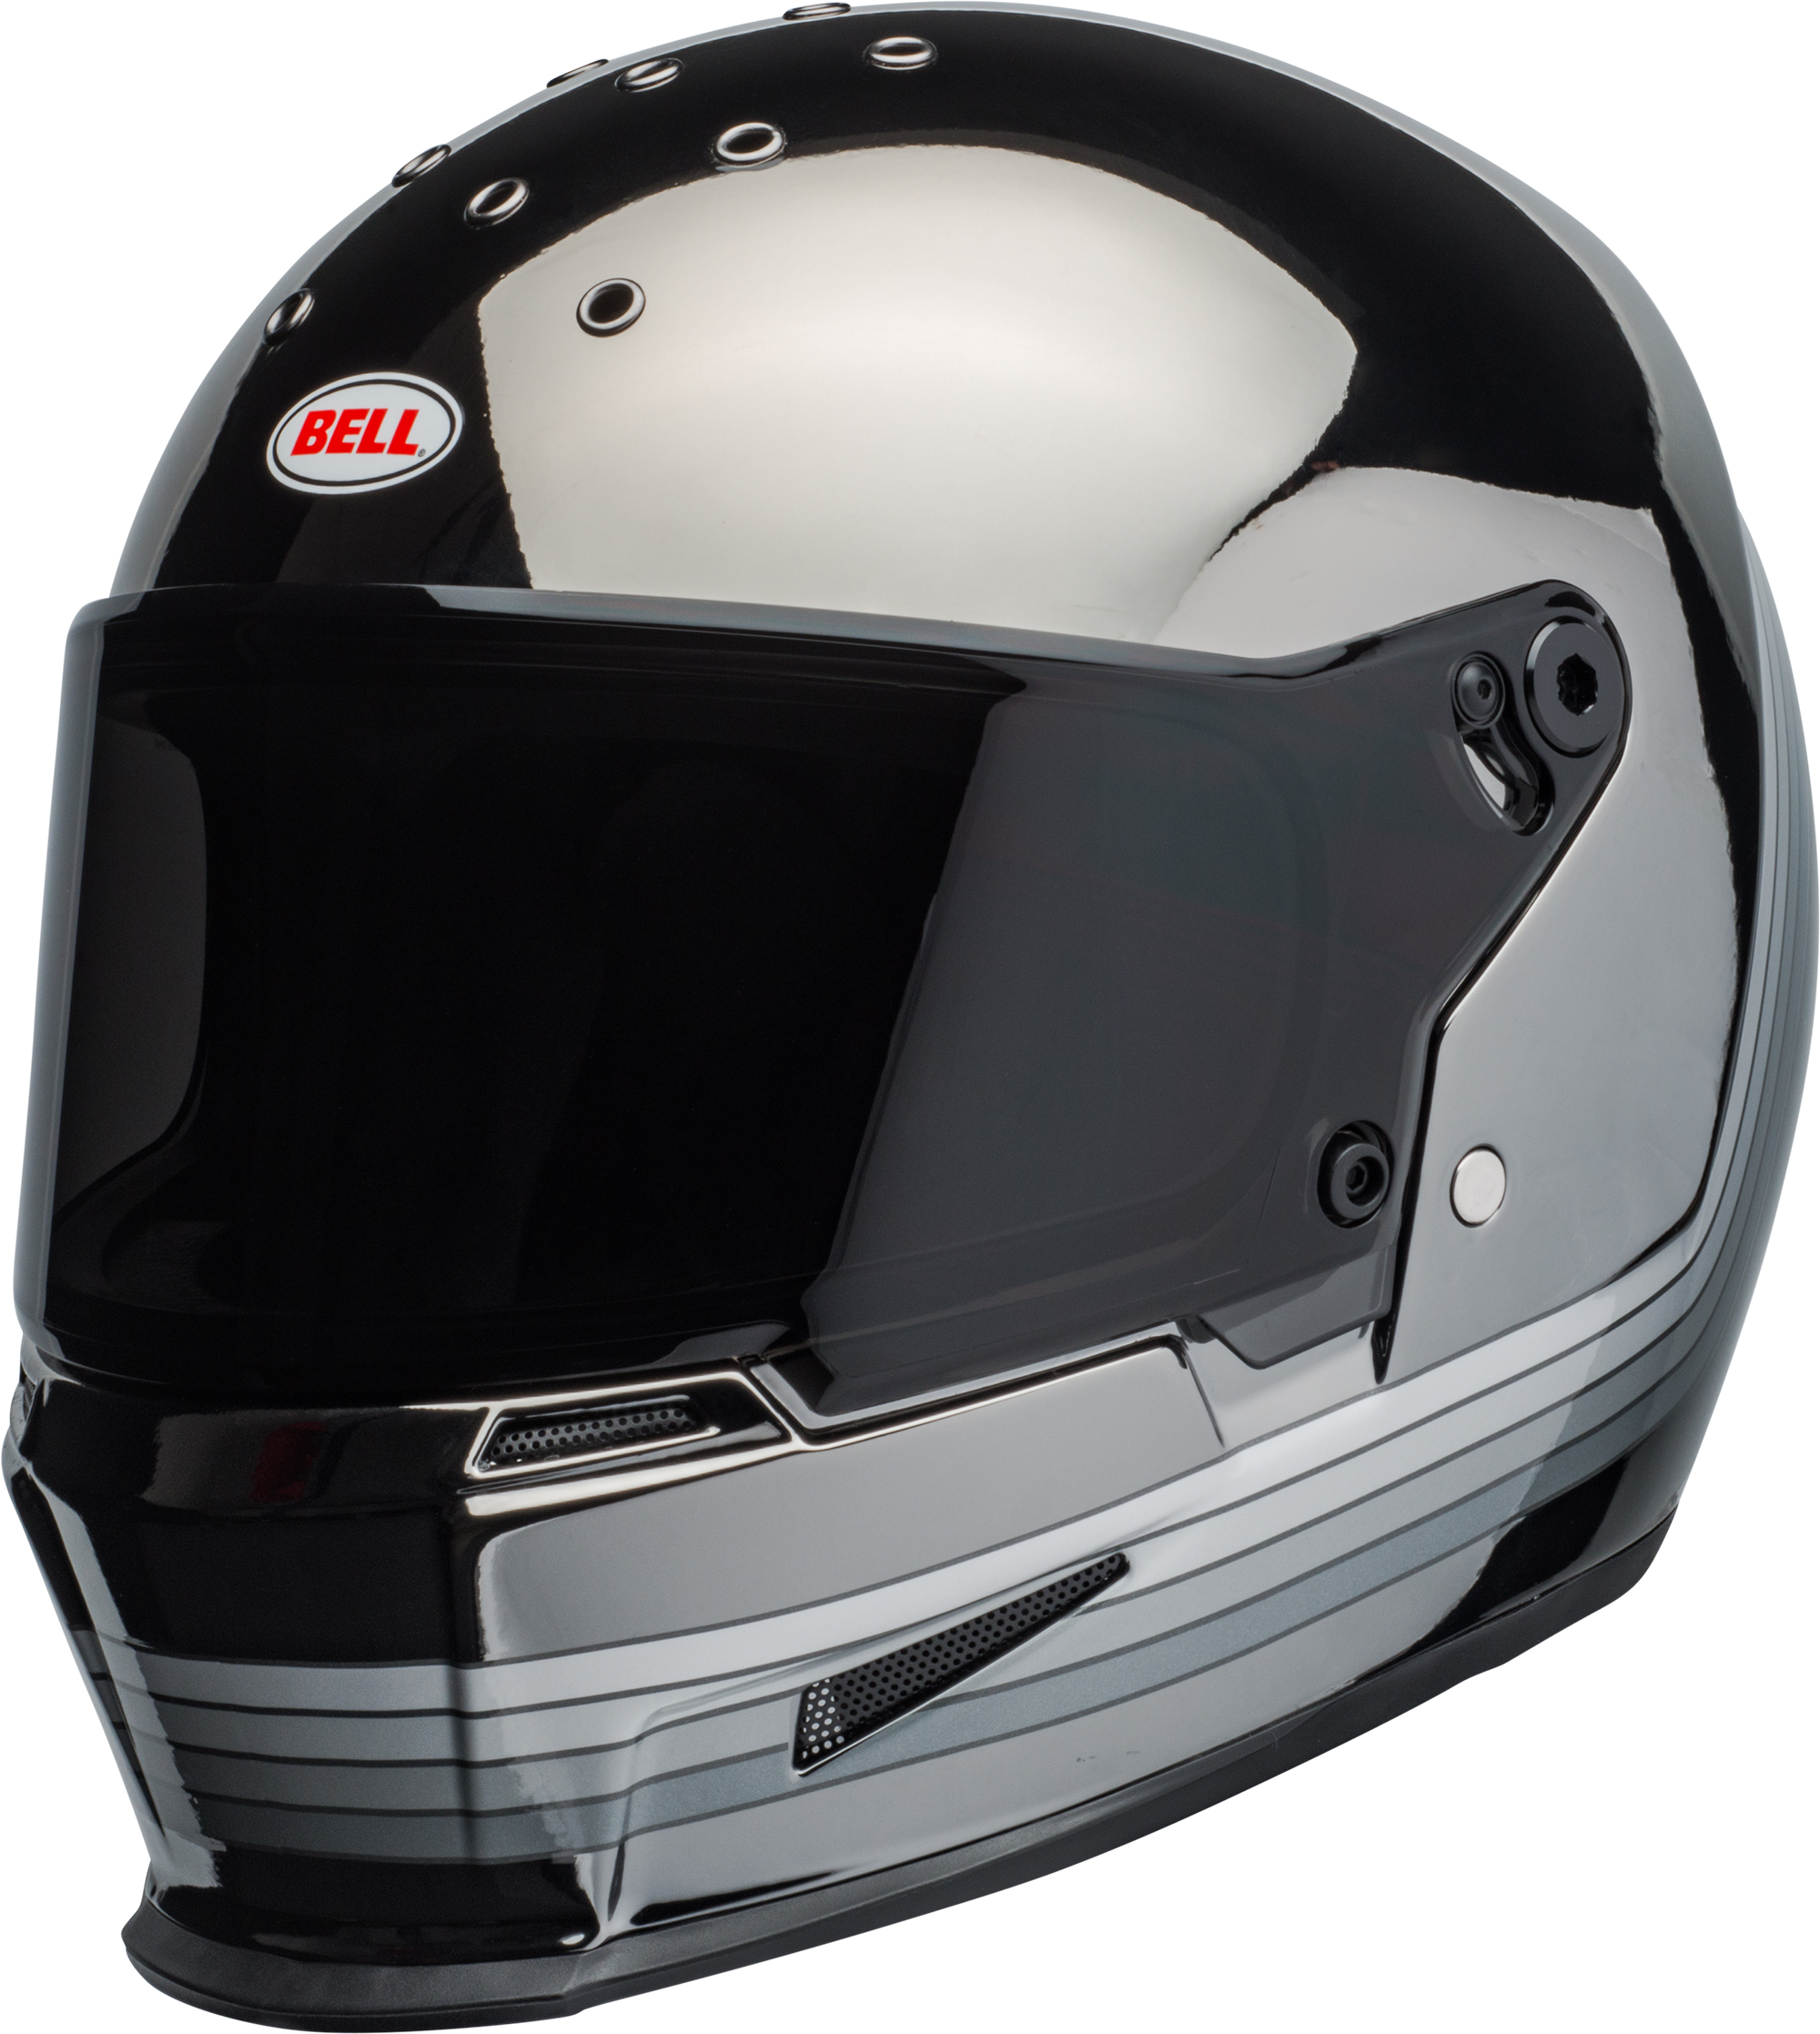 Bell Helmet Matte Black / Bell Custom 500 Matte Black Motorcycle Helmet